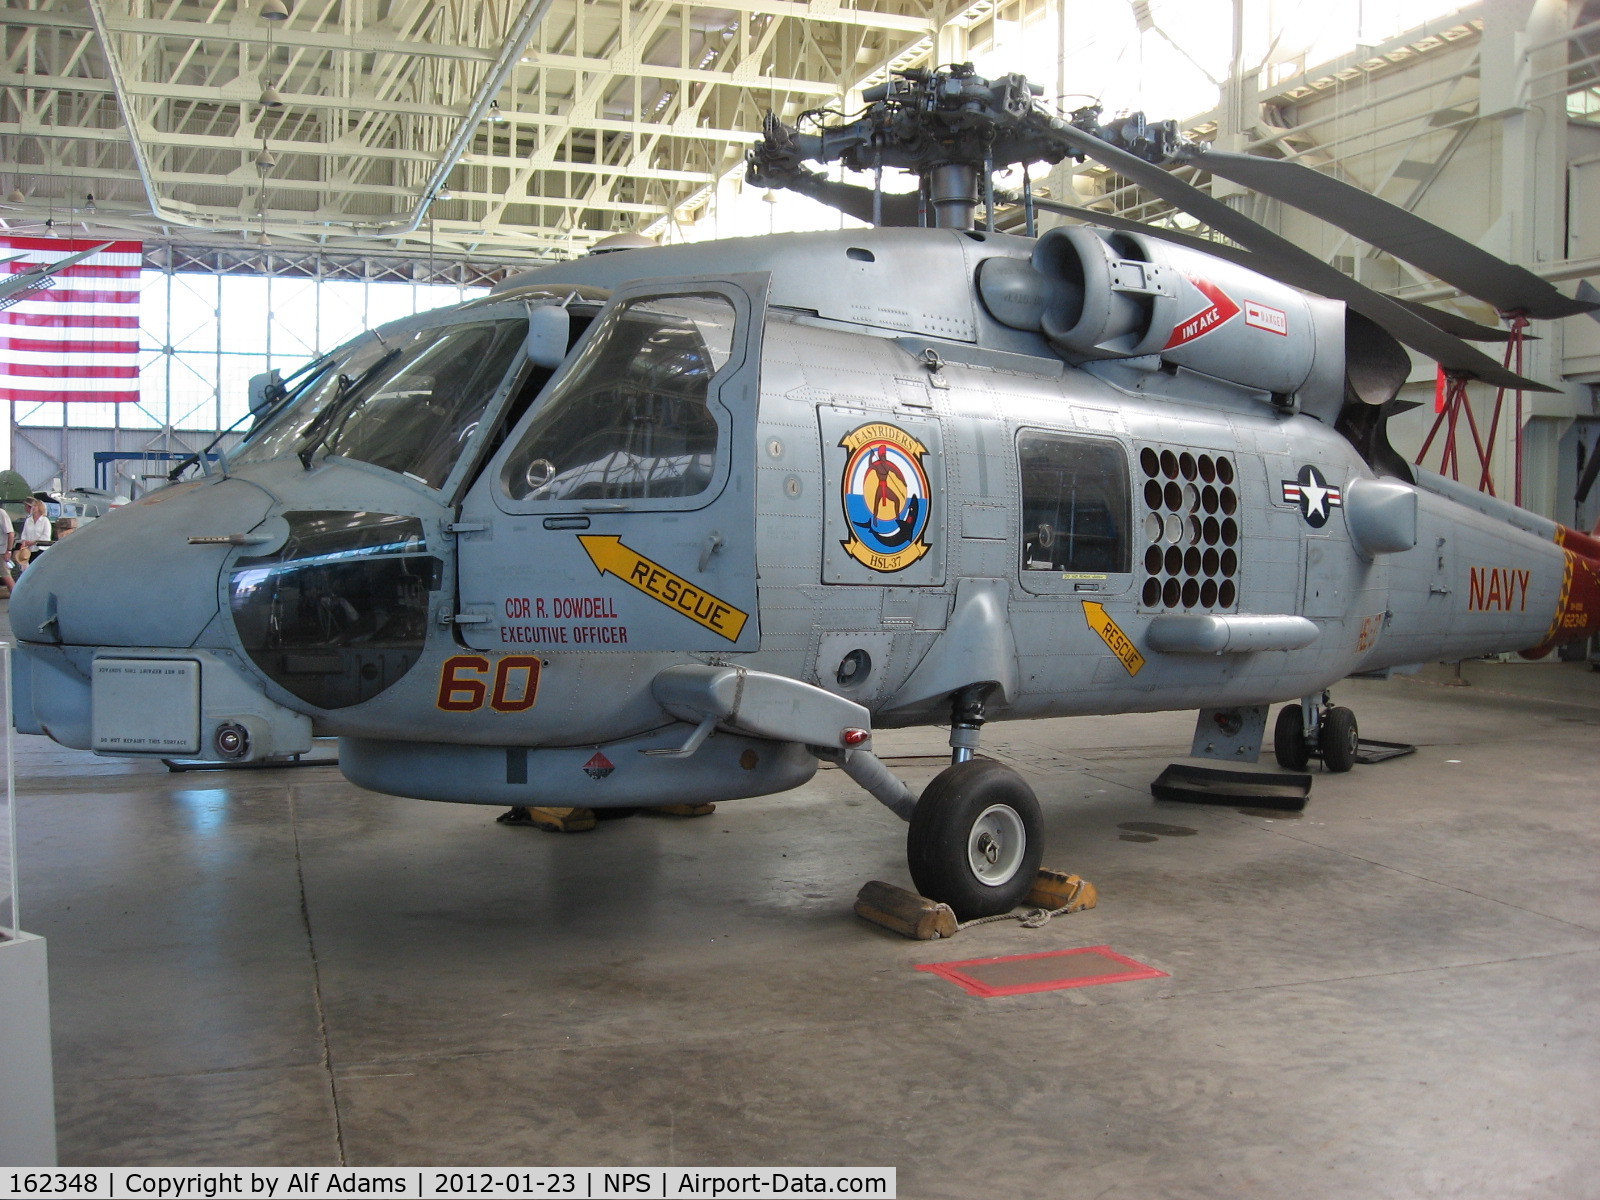 162348, Sikorsky SH-60B Seahawk C/N 70-0457, Displayed at the Pacific Aviation Museum, Honolulu, Hawaii in 2012.